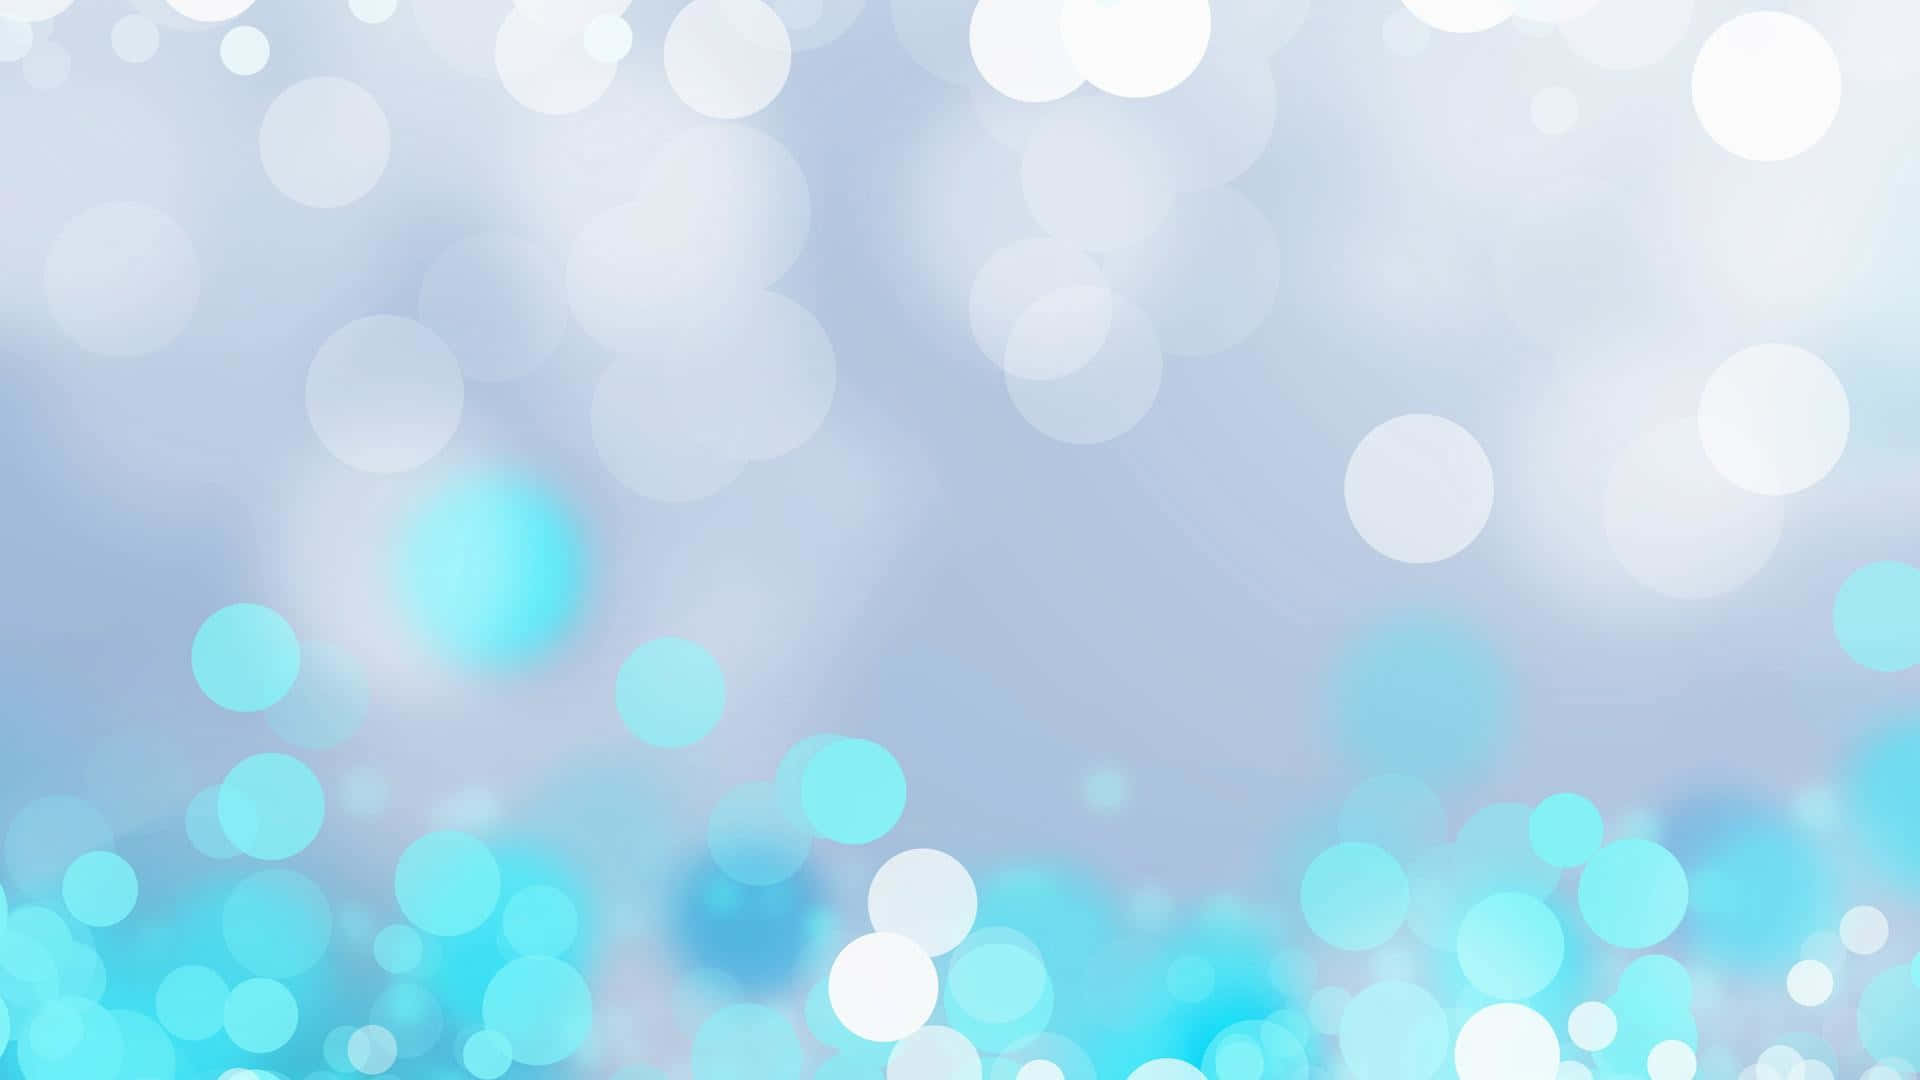 Blur Sparkly Blue Background In Gray